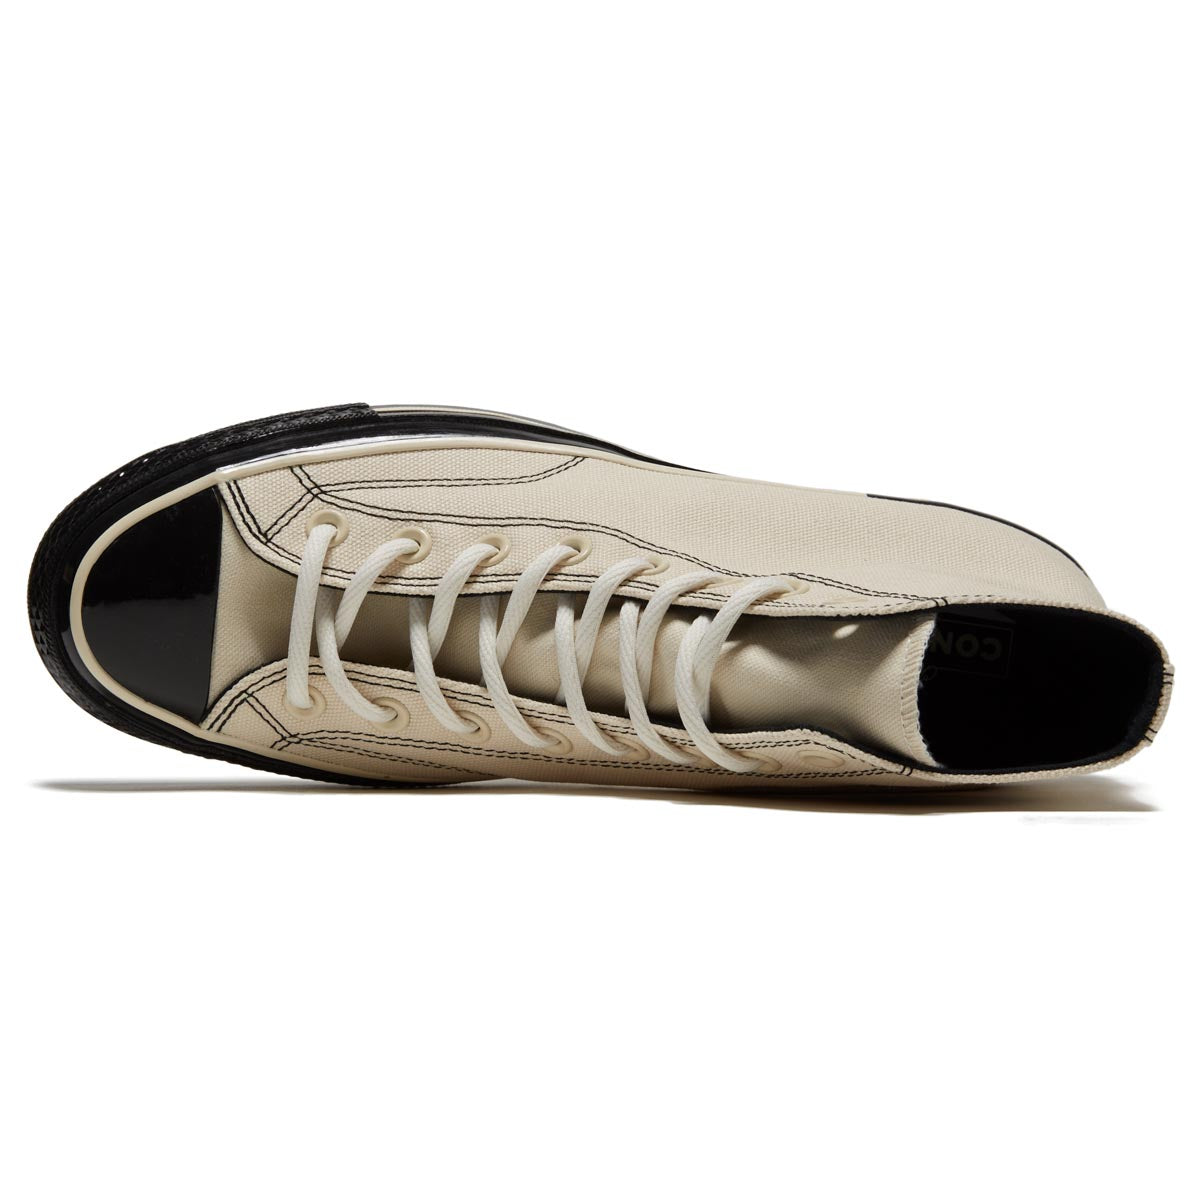 Converse Chuck 70 Hi Shoes - Natural Ivory/Black image 3